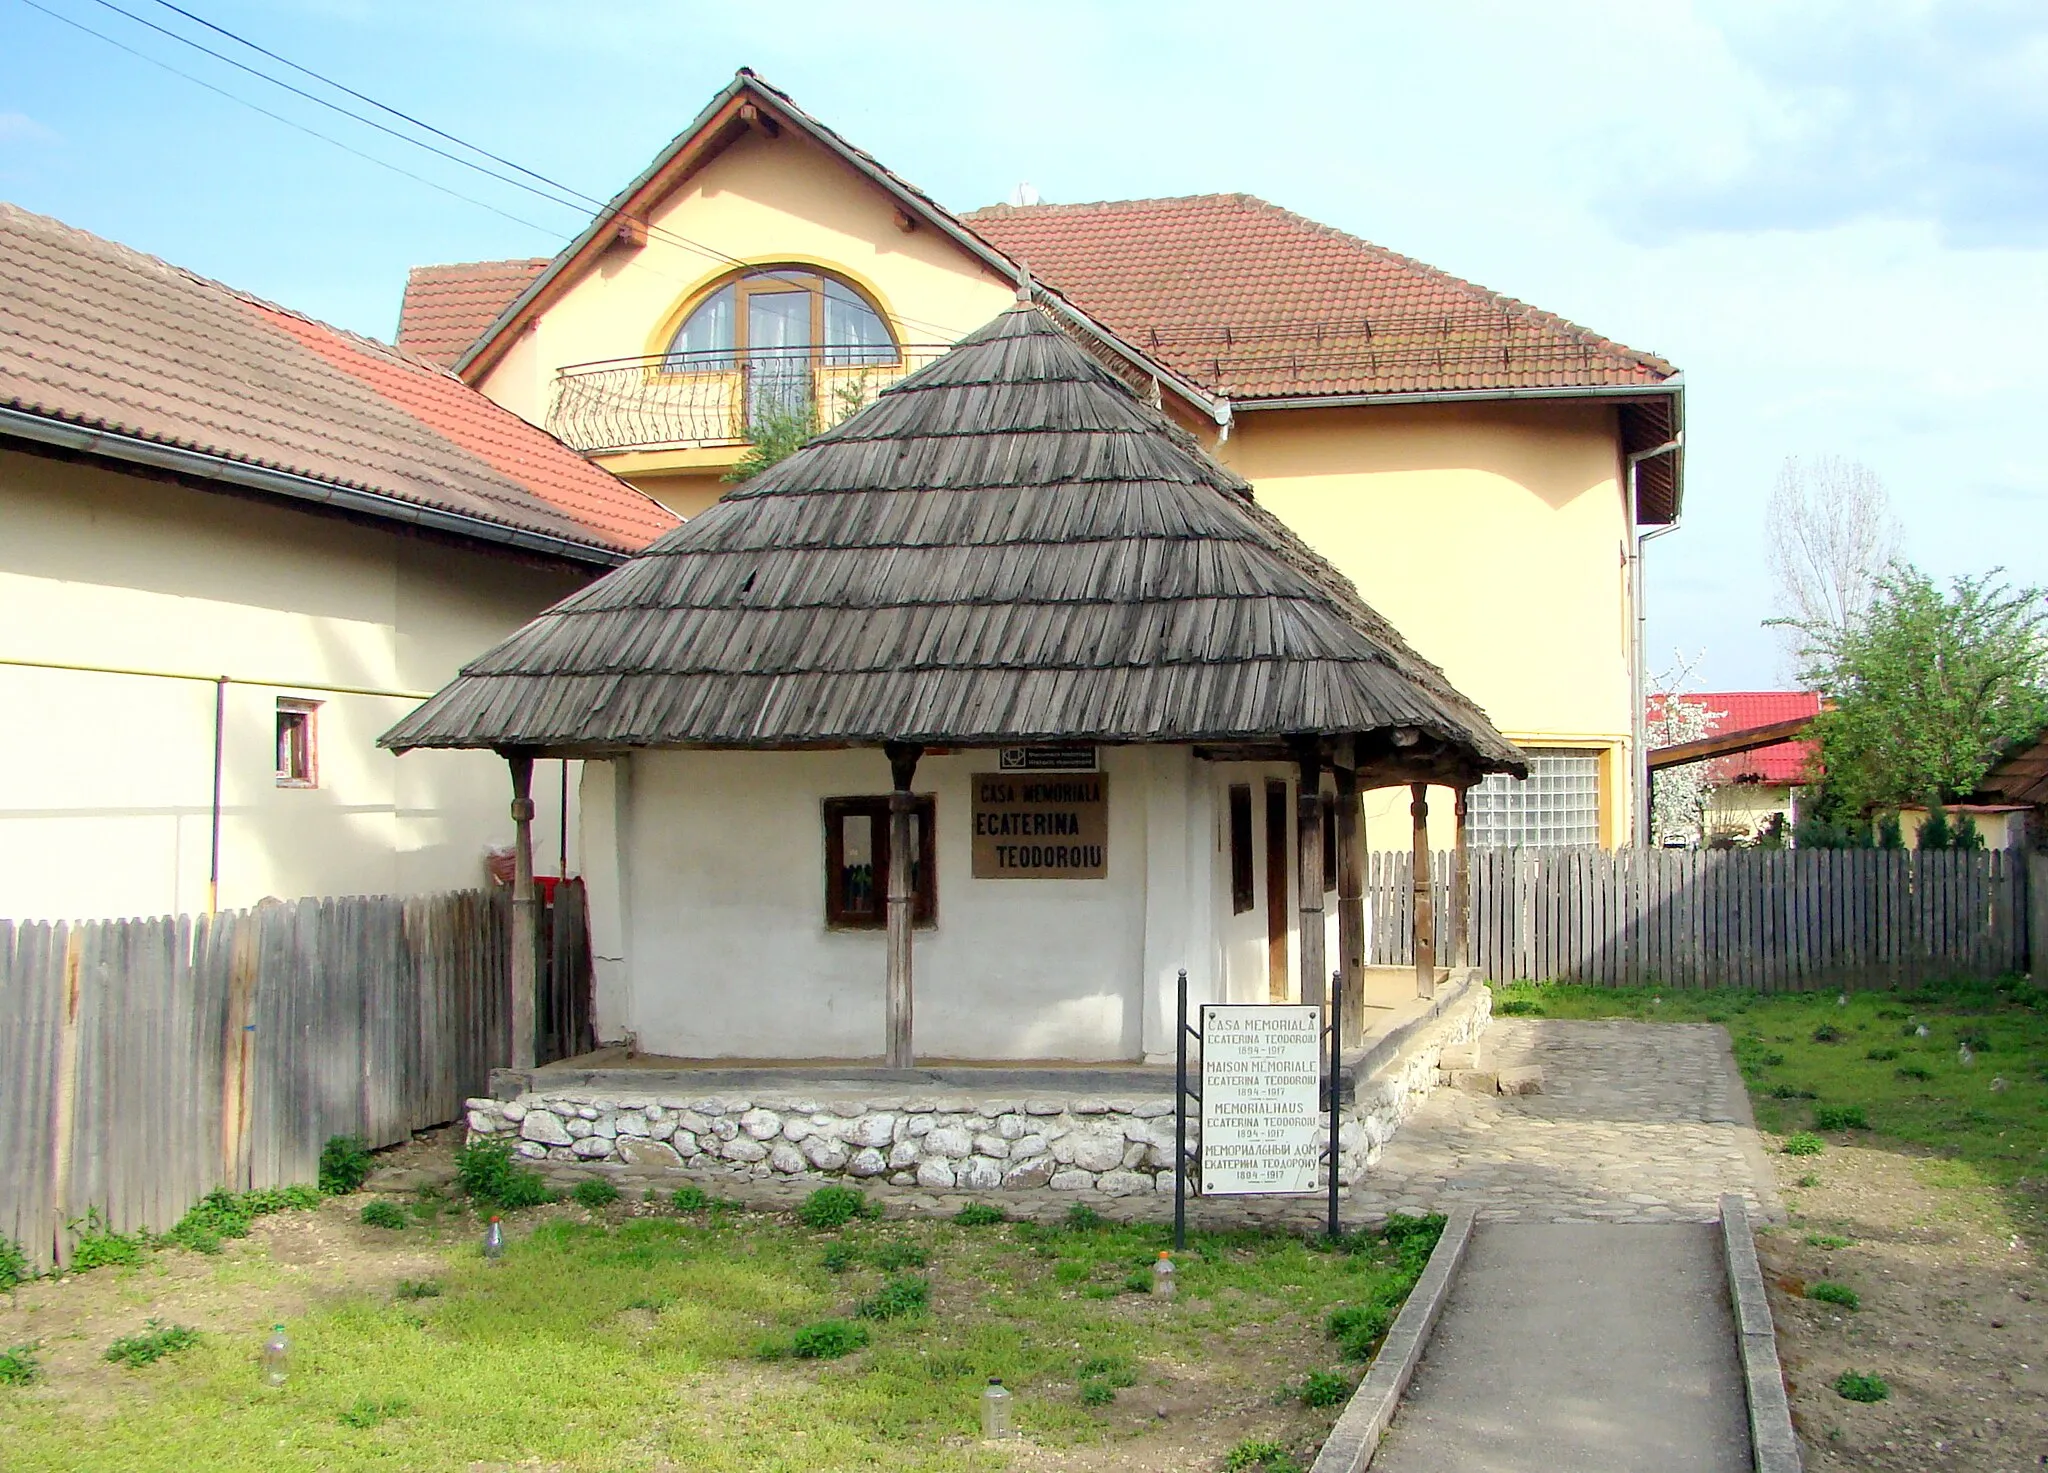 Photo showing: Ecaterina Teodoroiu Memorial House in Târgu Jiu